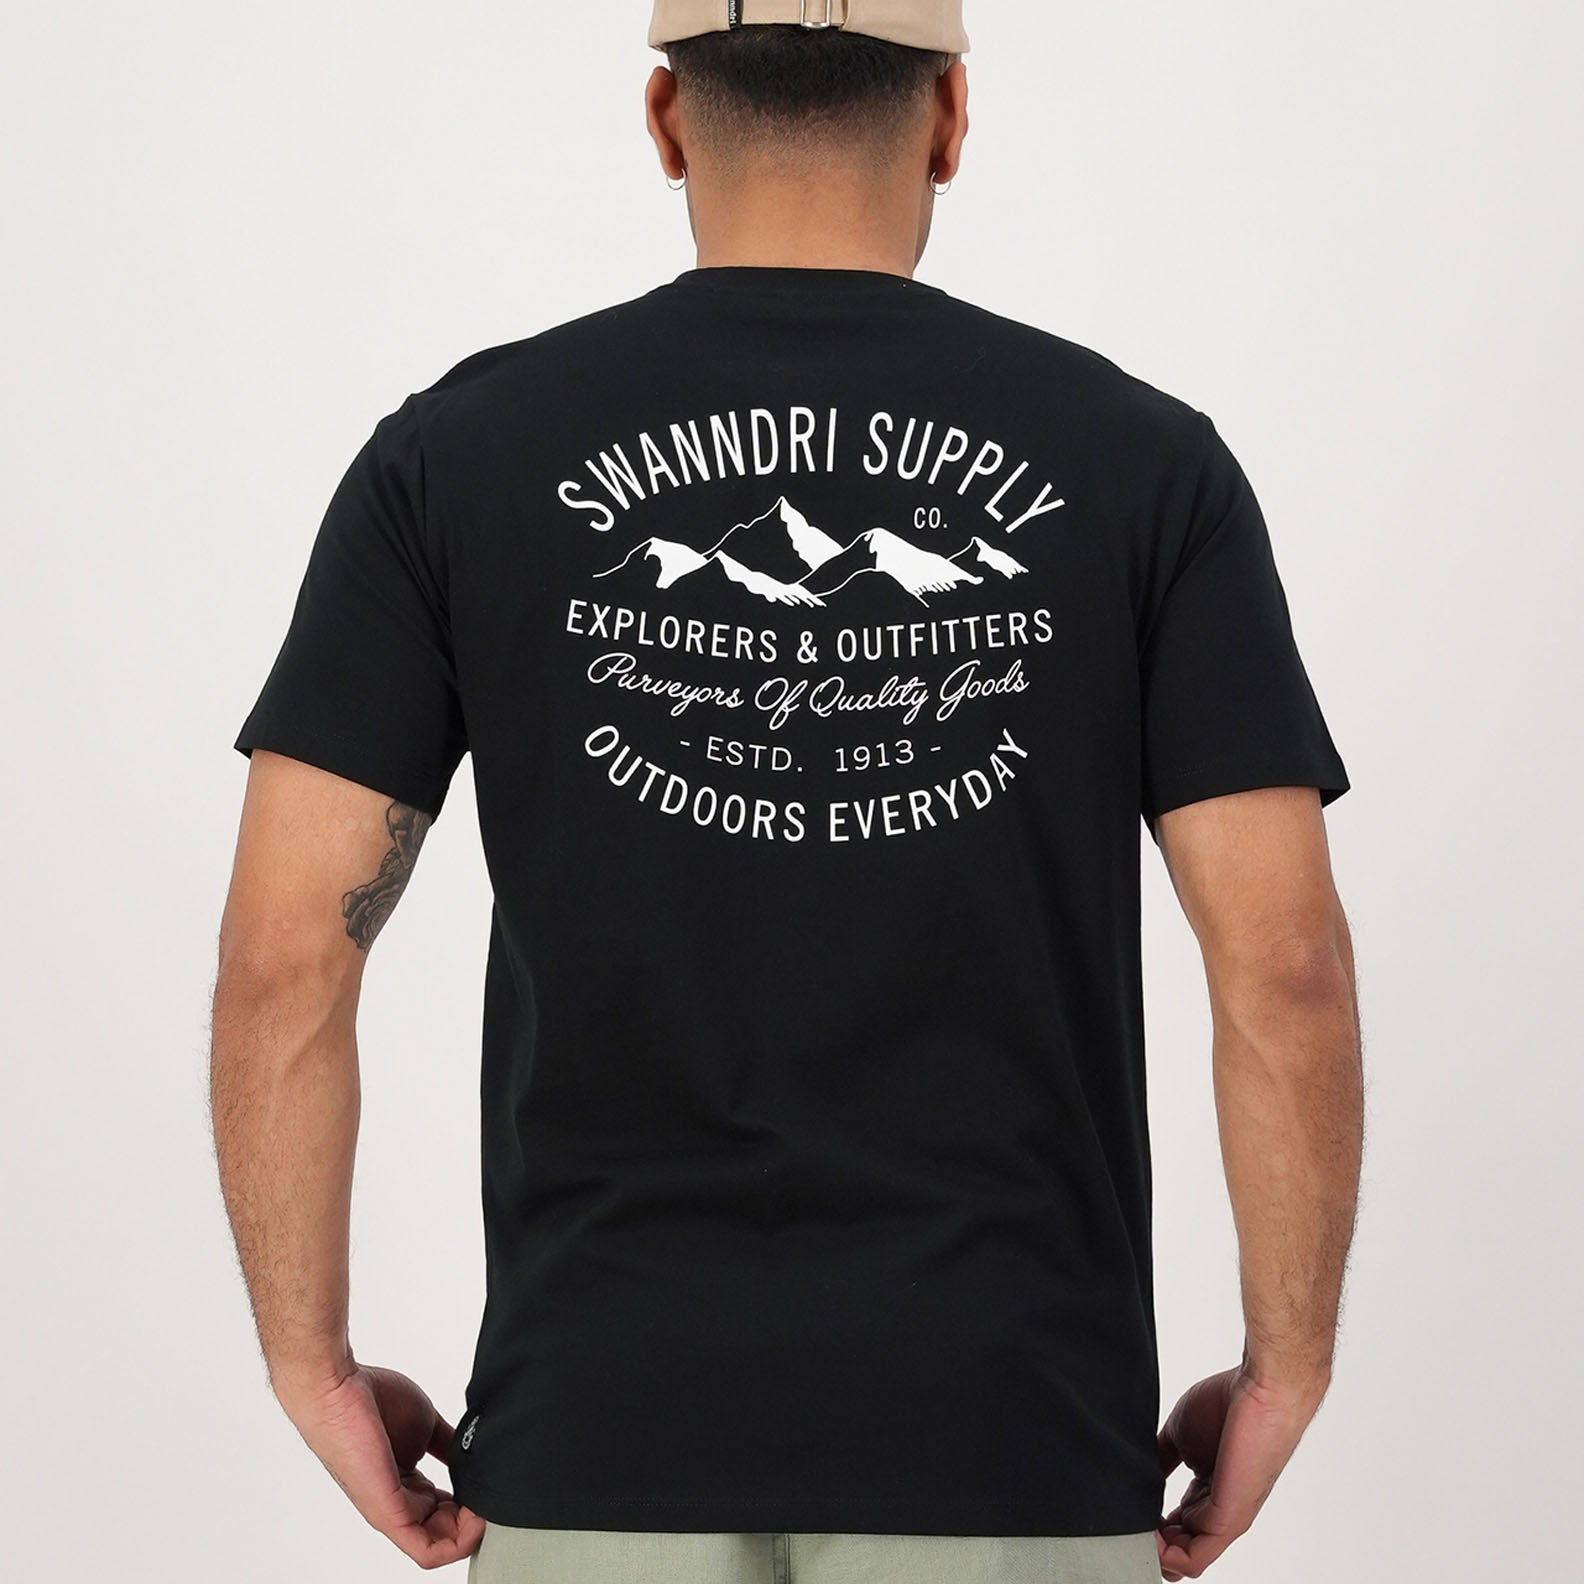 Swanndri Old Ties Printed T Shirt